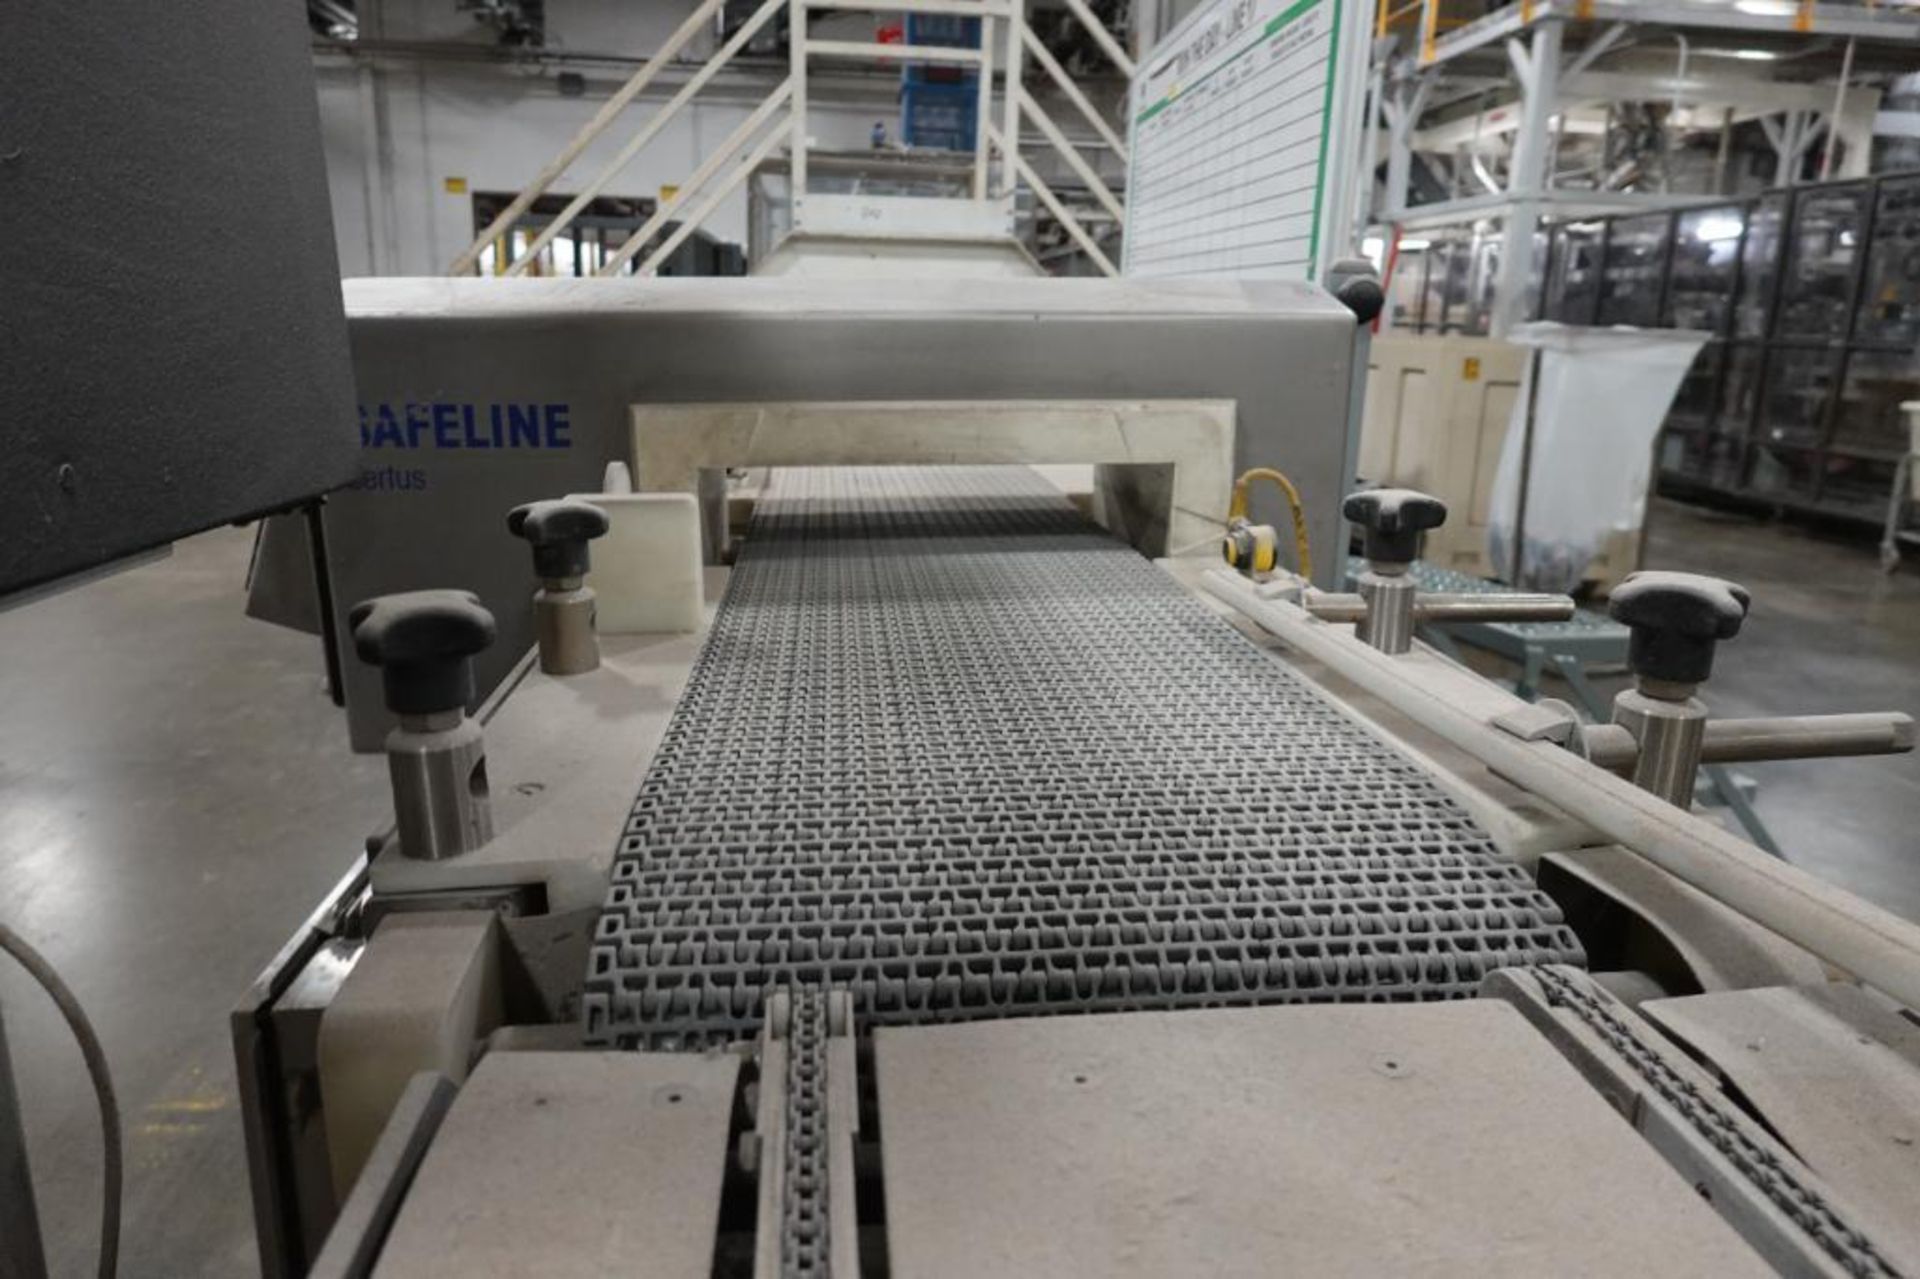 2010 Safeline Certus metal detector with conveyor - Image 11 of 11